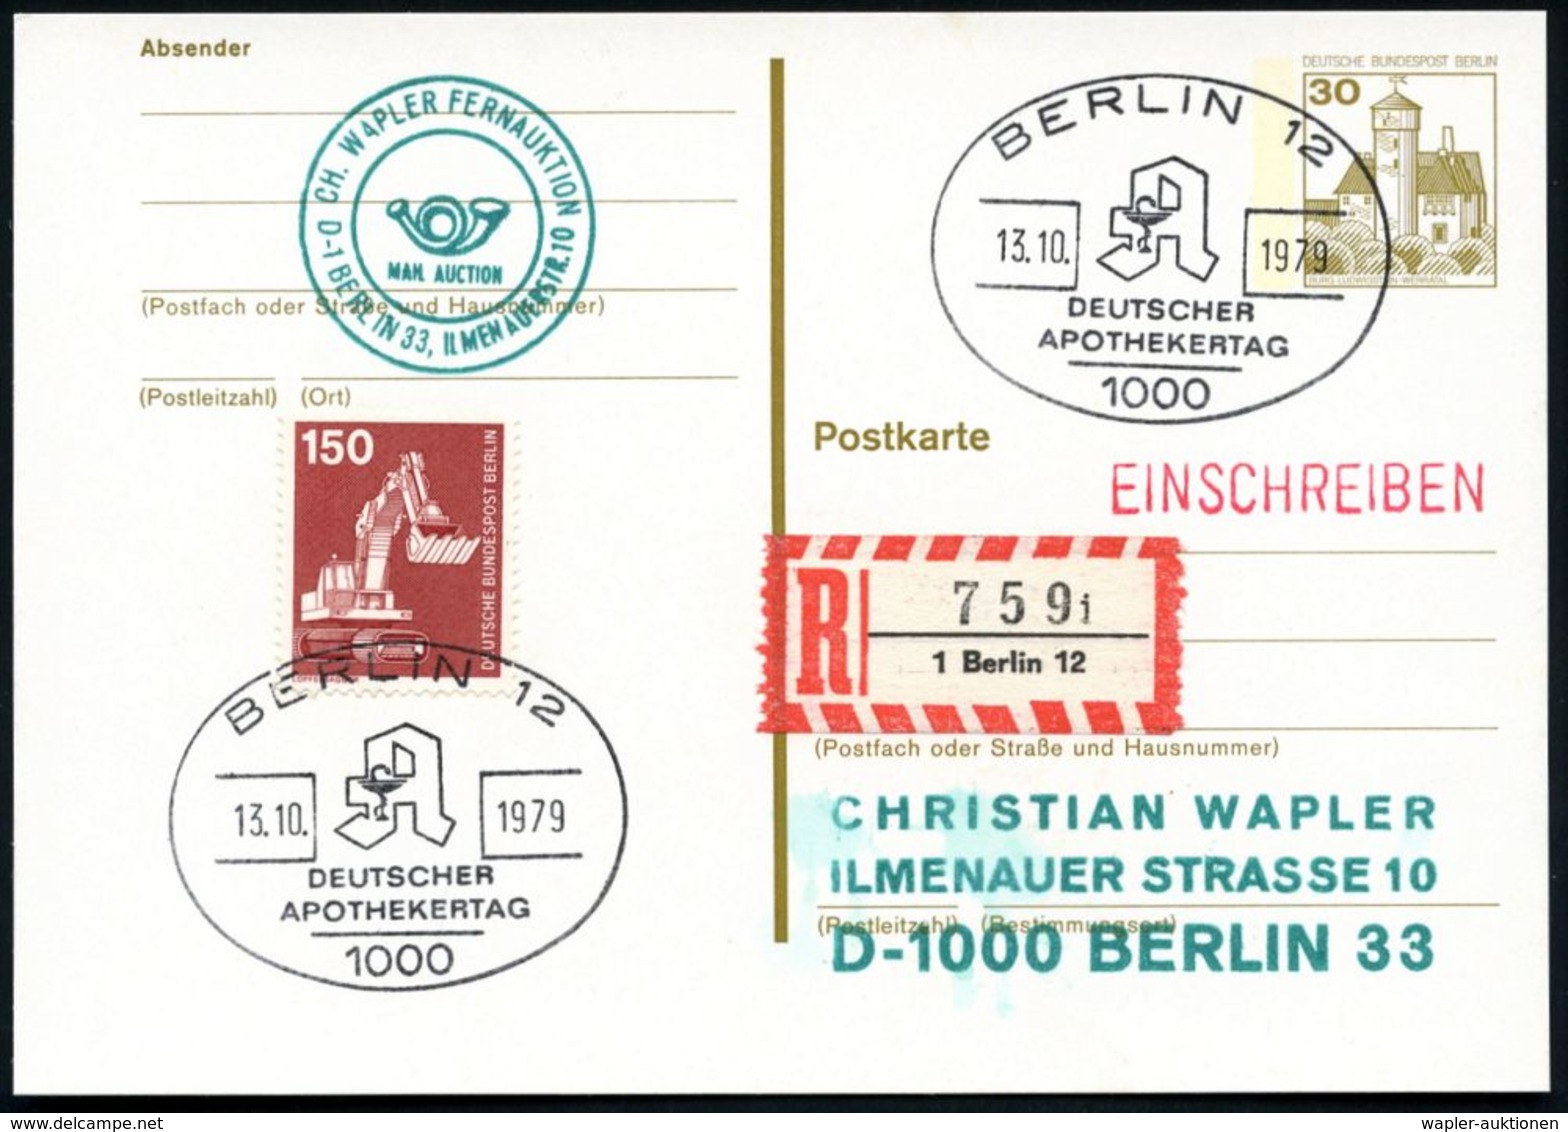 1000 BERLIN 12/ DEUTSCHER/ APOTHEKERTAG 1979 (13.10.) SSt (Monogr."A") + RZ: 1 Berlin 12/j, Orts-R-Karte (Bo.2054) - - Farmacia